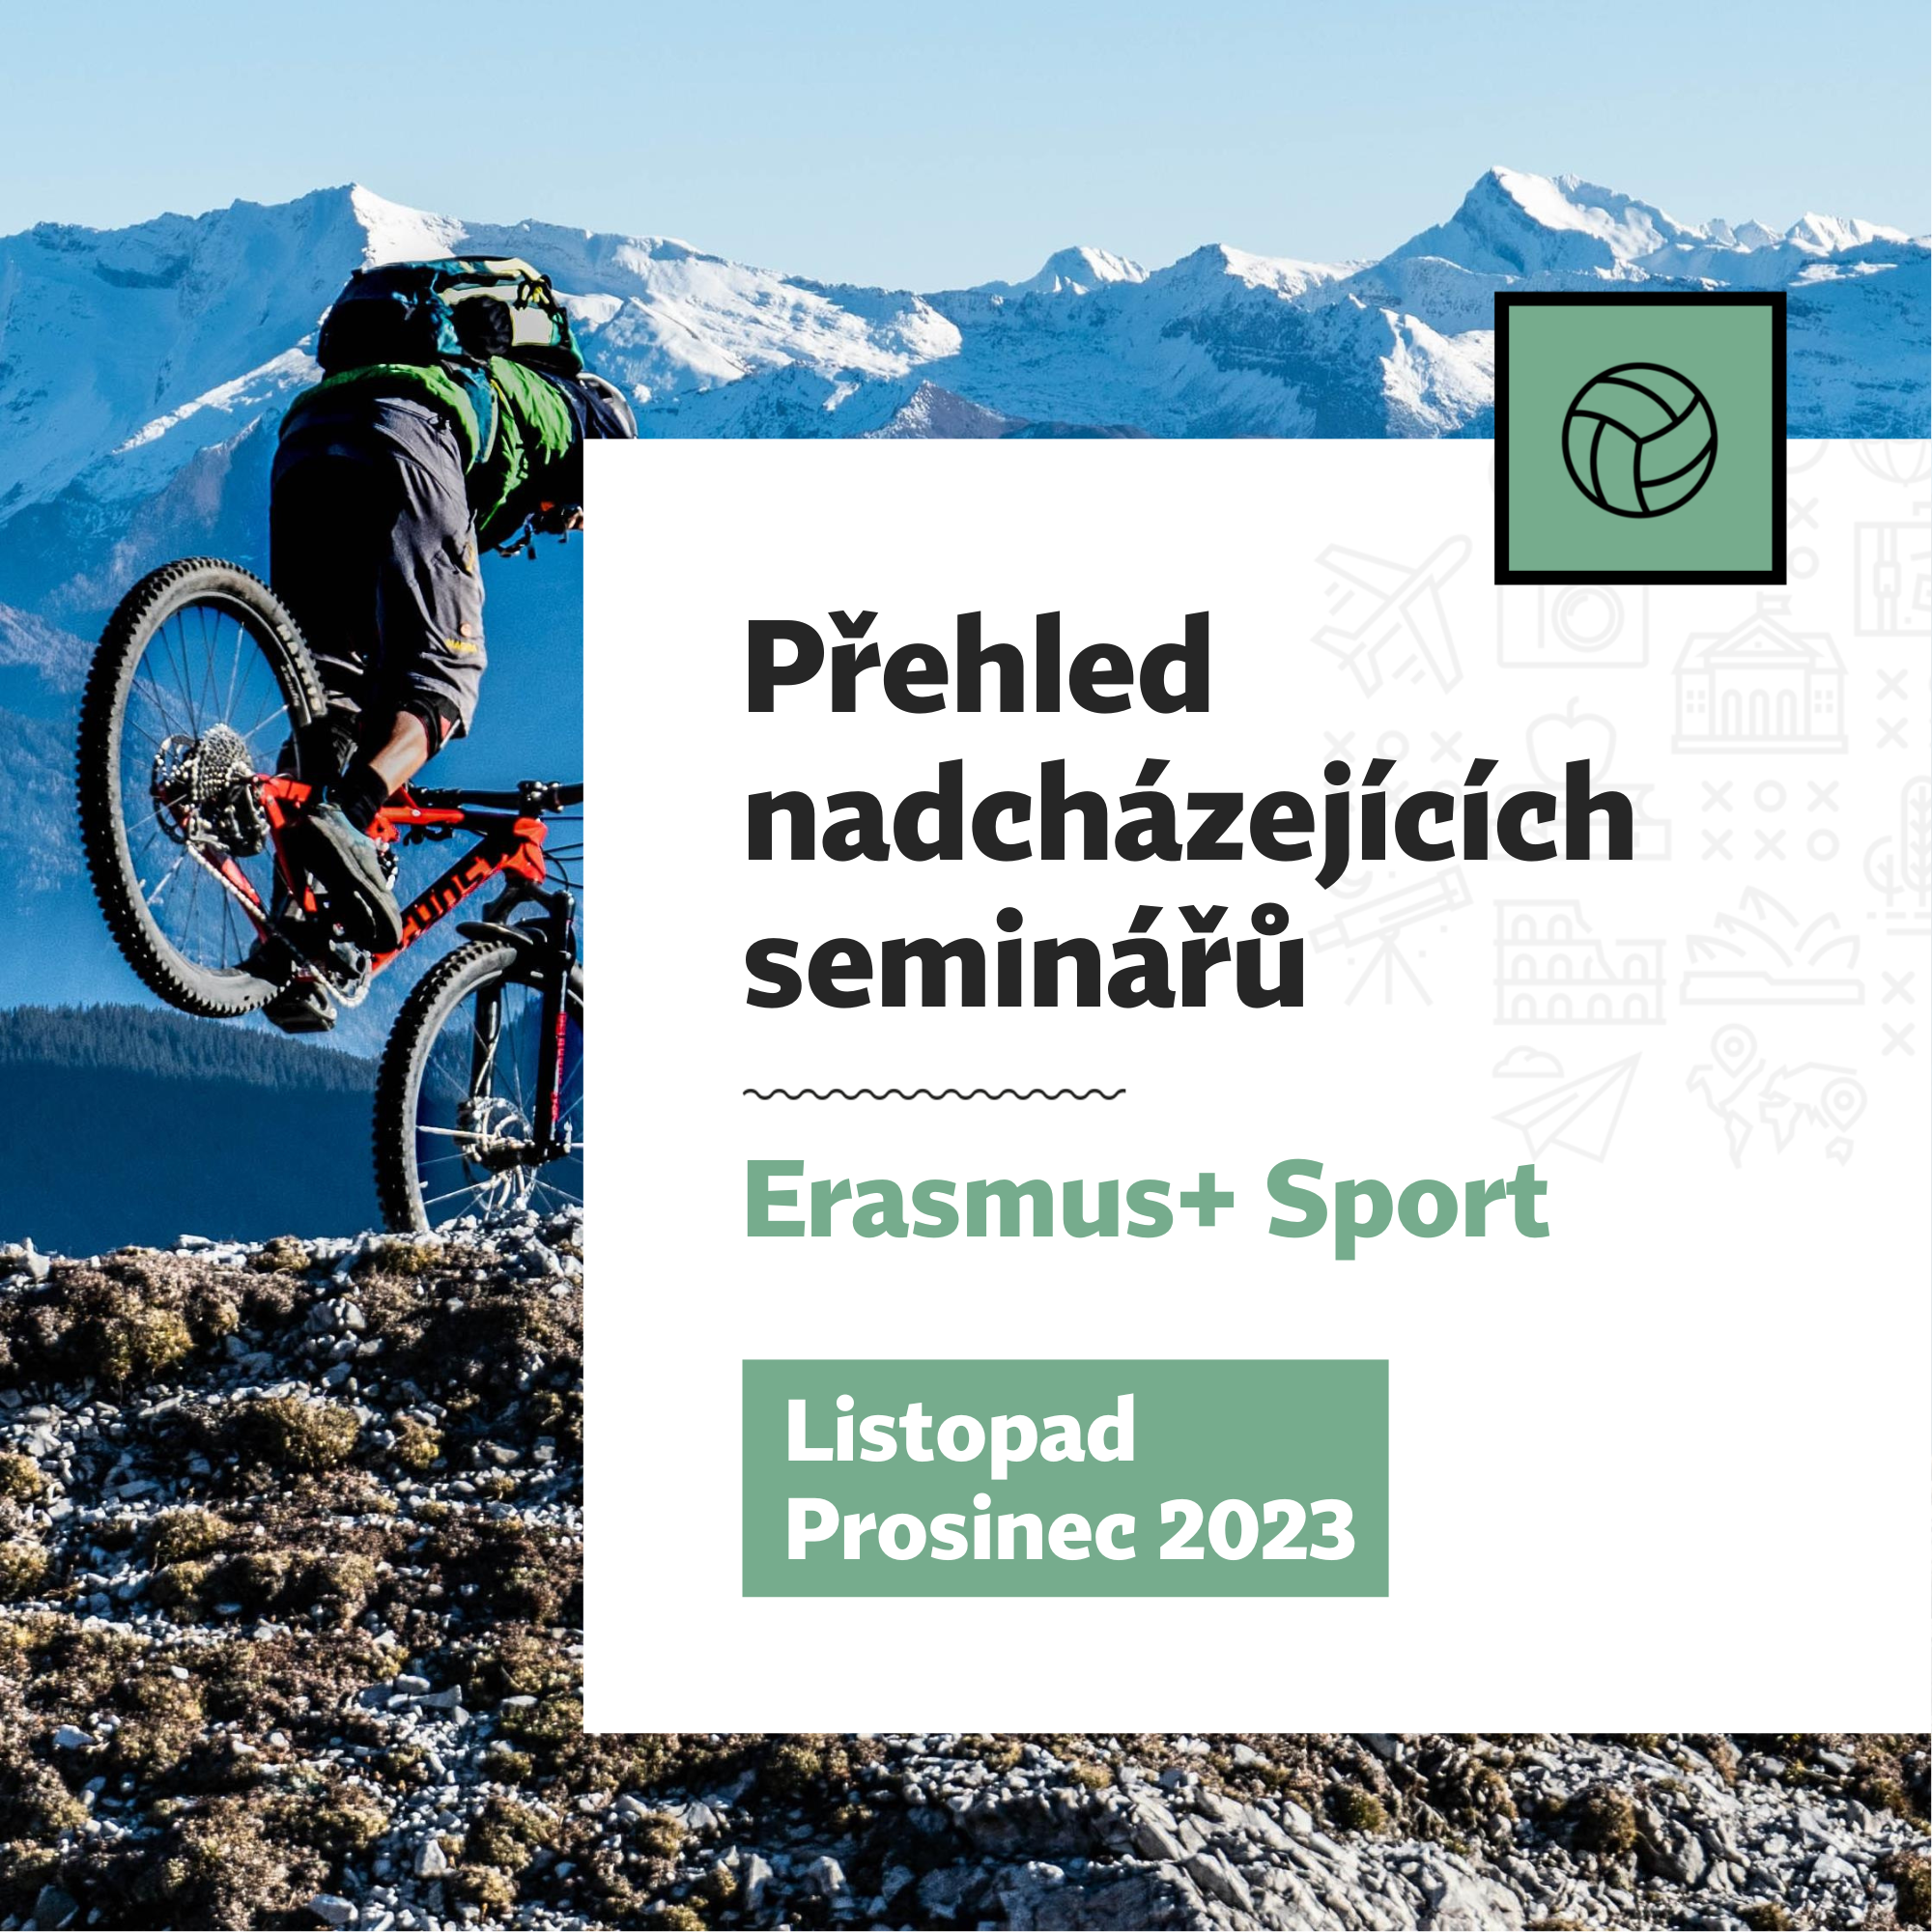 Erasmus+ Sport semine